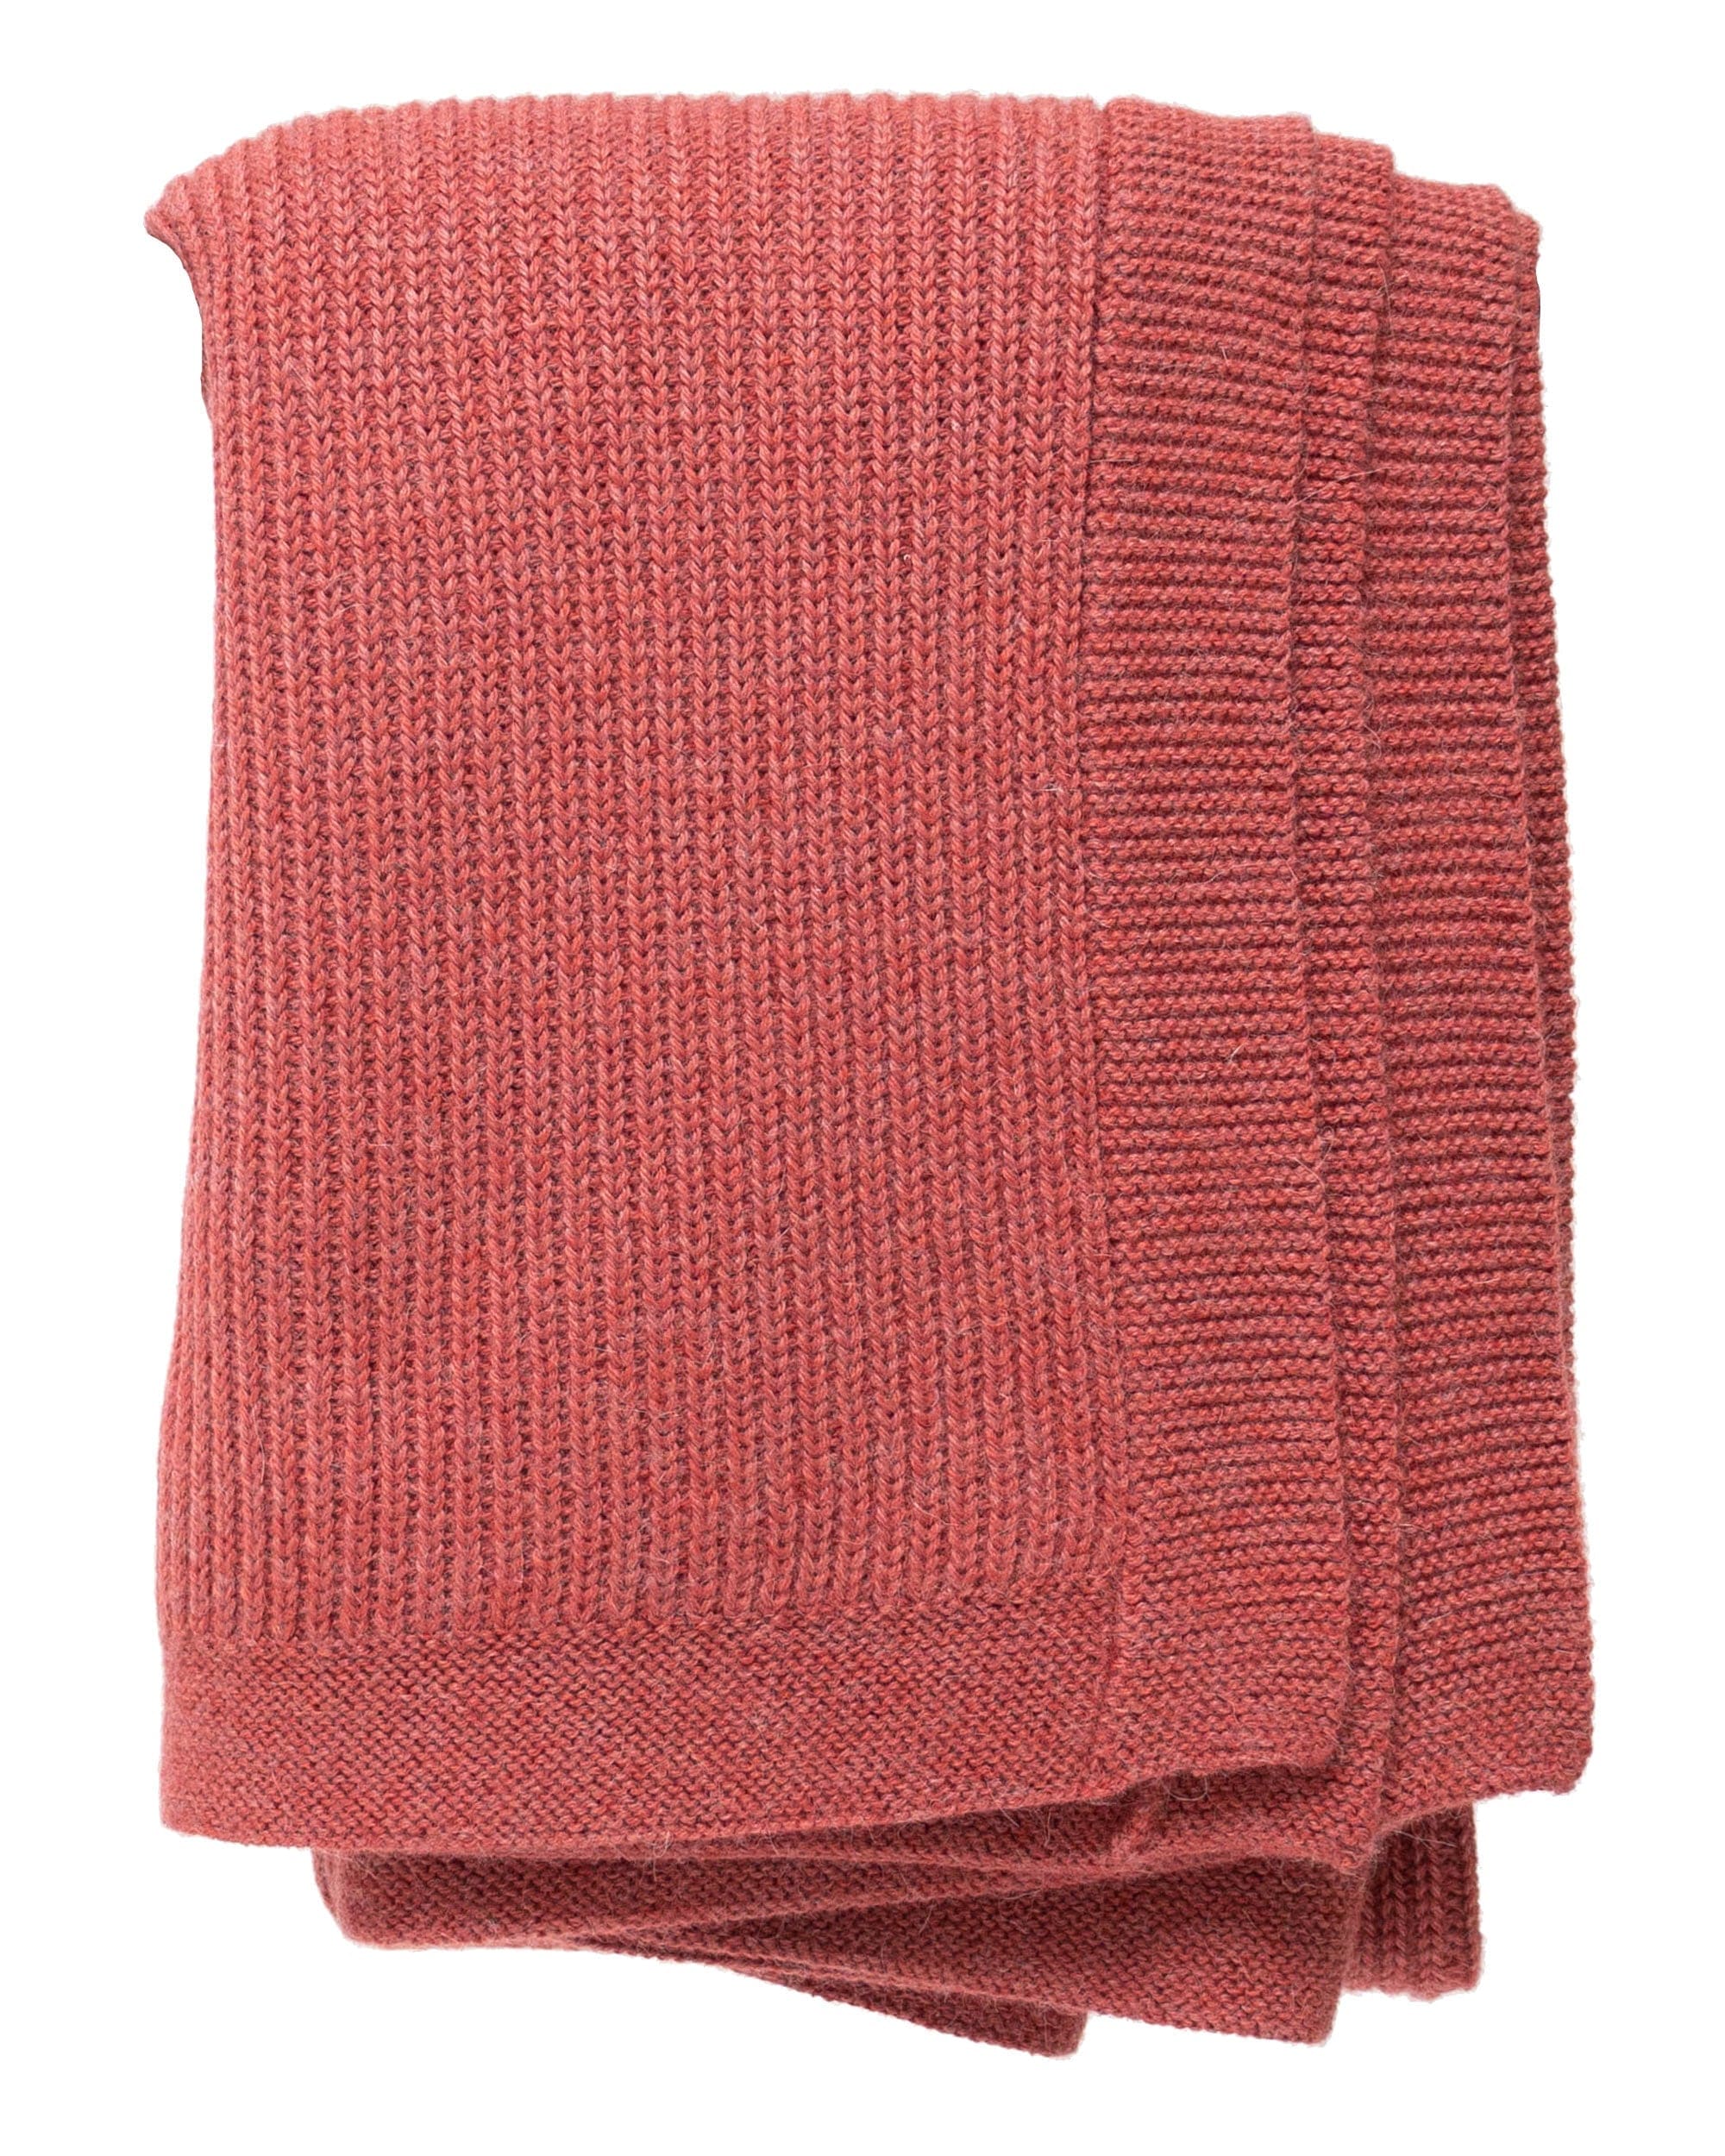 Heavy Knit Alpaca Wool Throw Blanket in Nantucket Red